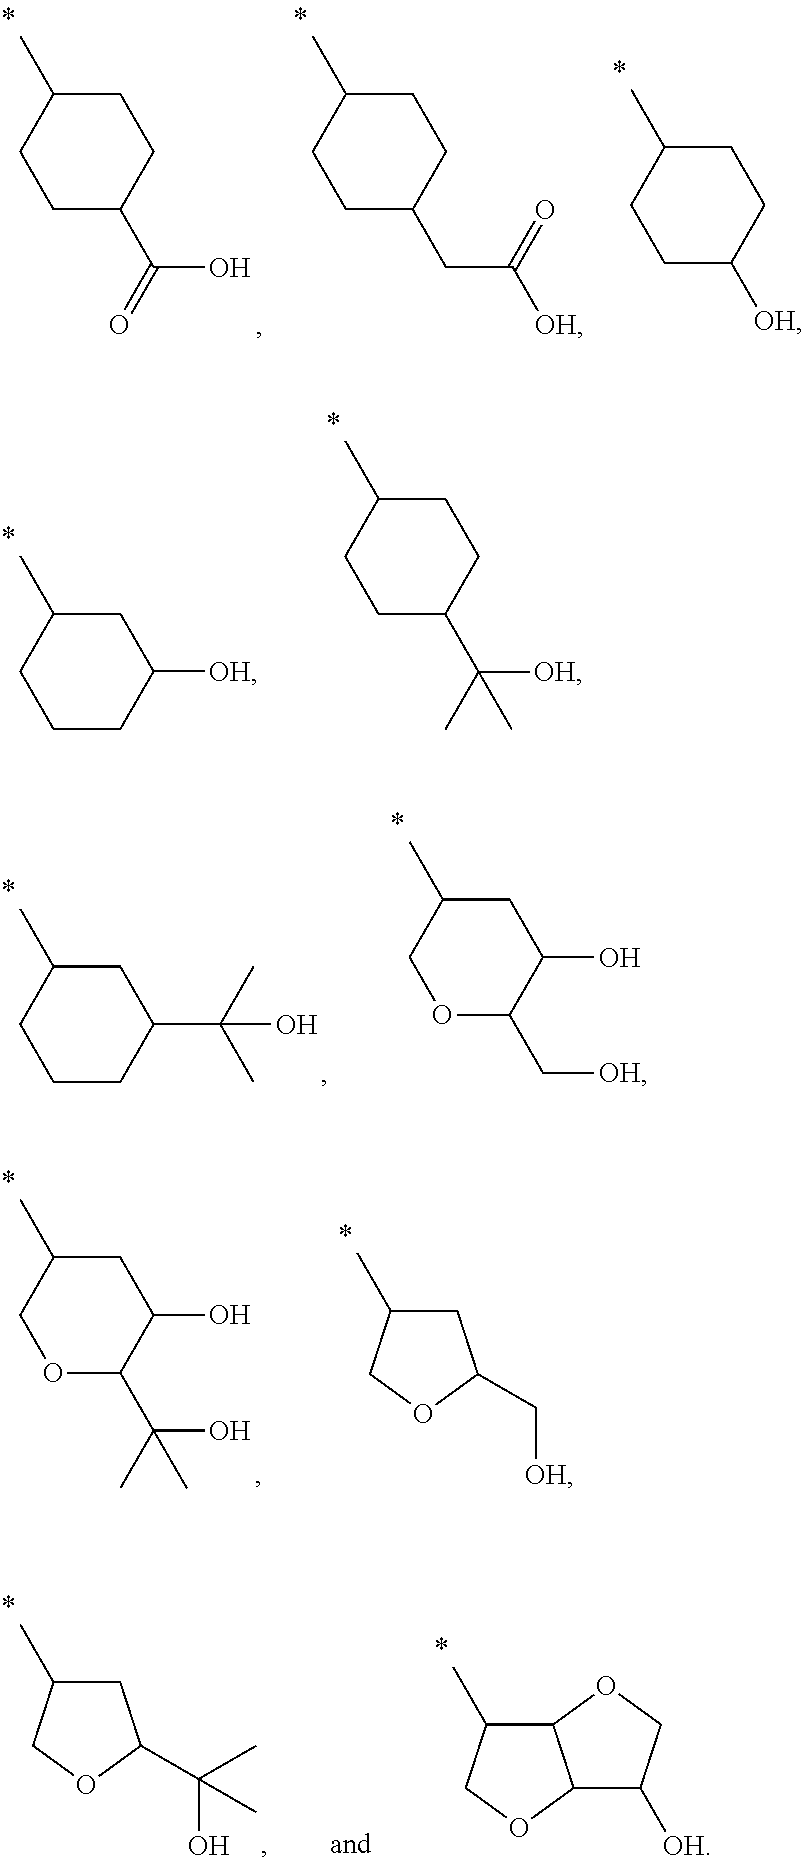 New azabenzimidazole derivatives